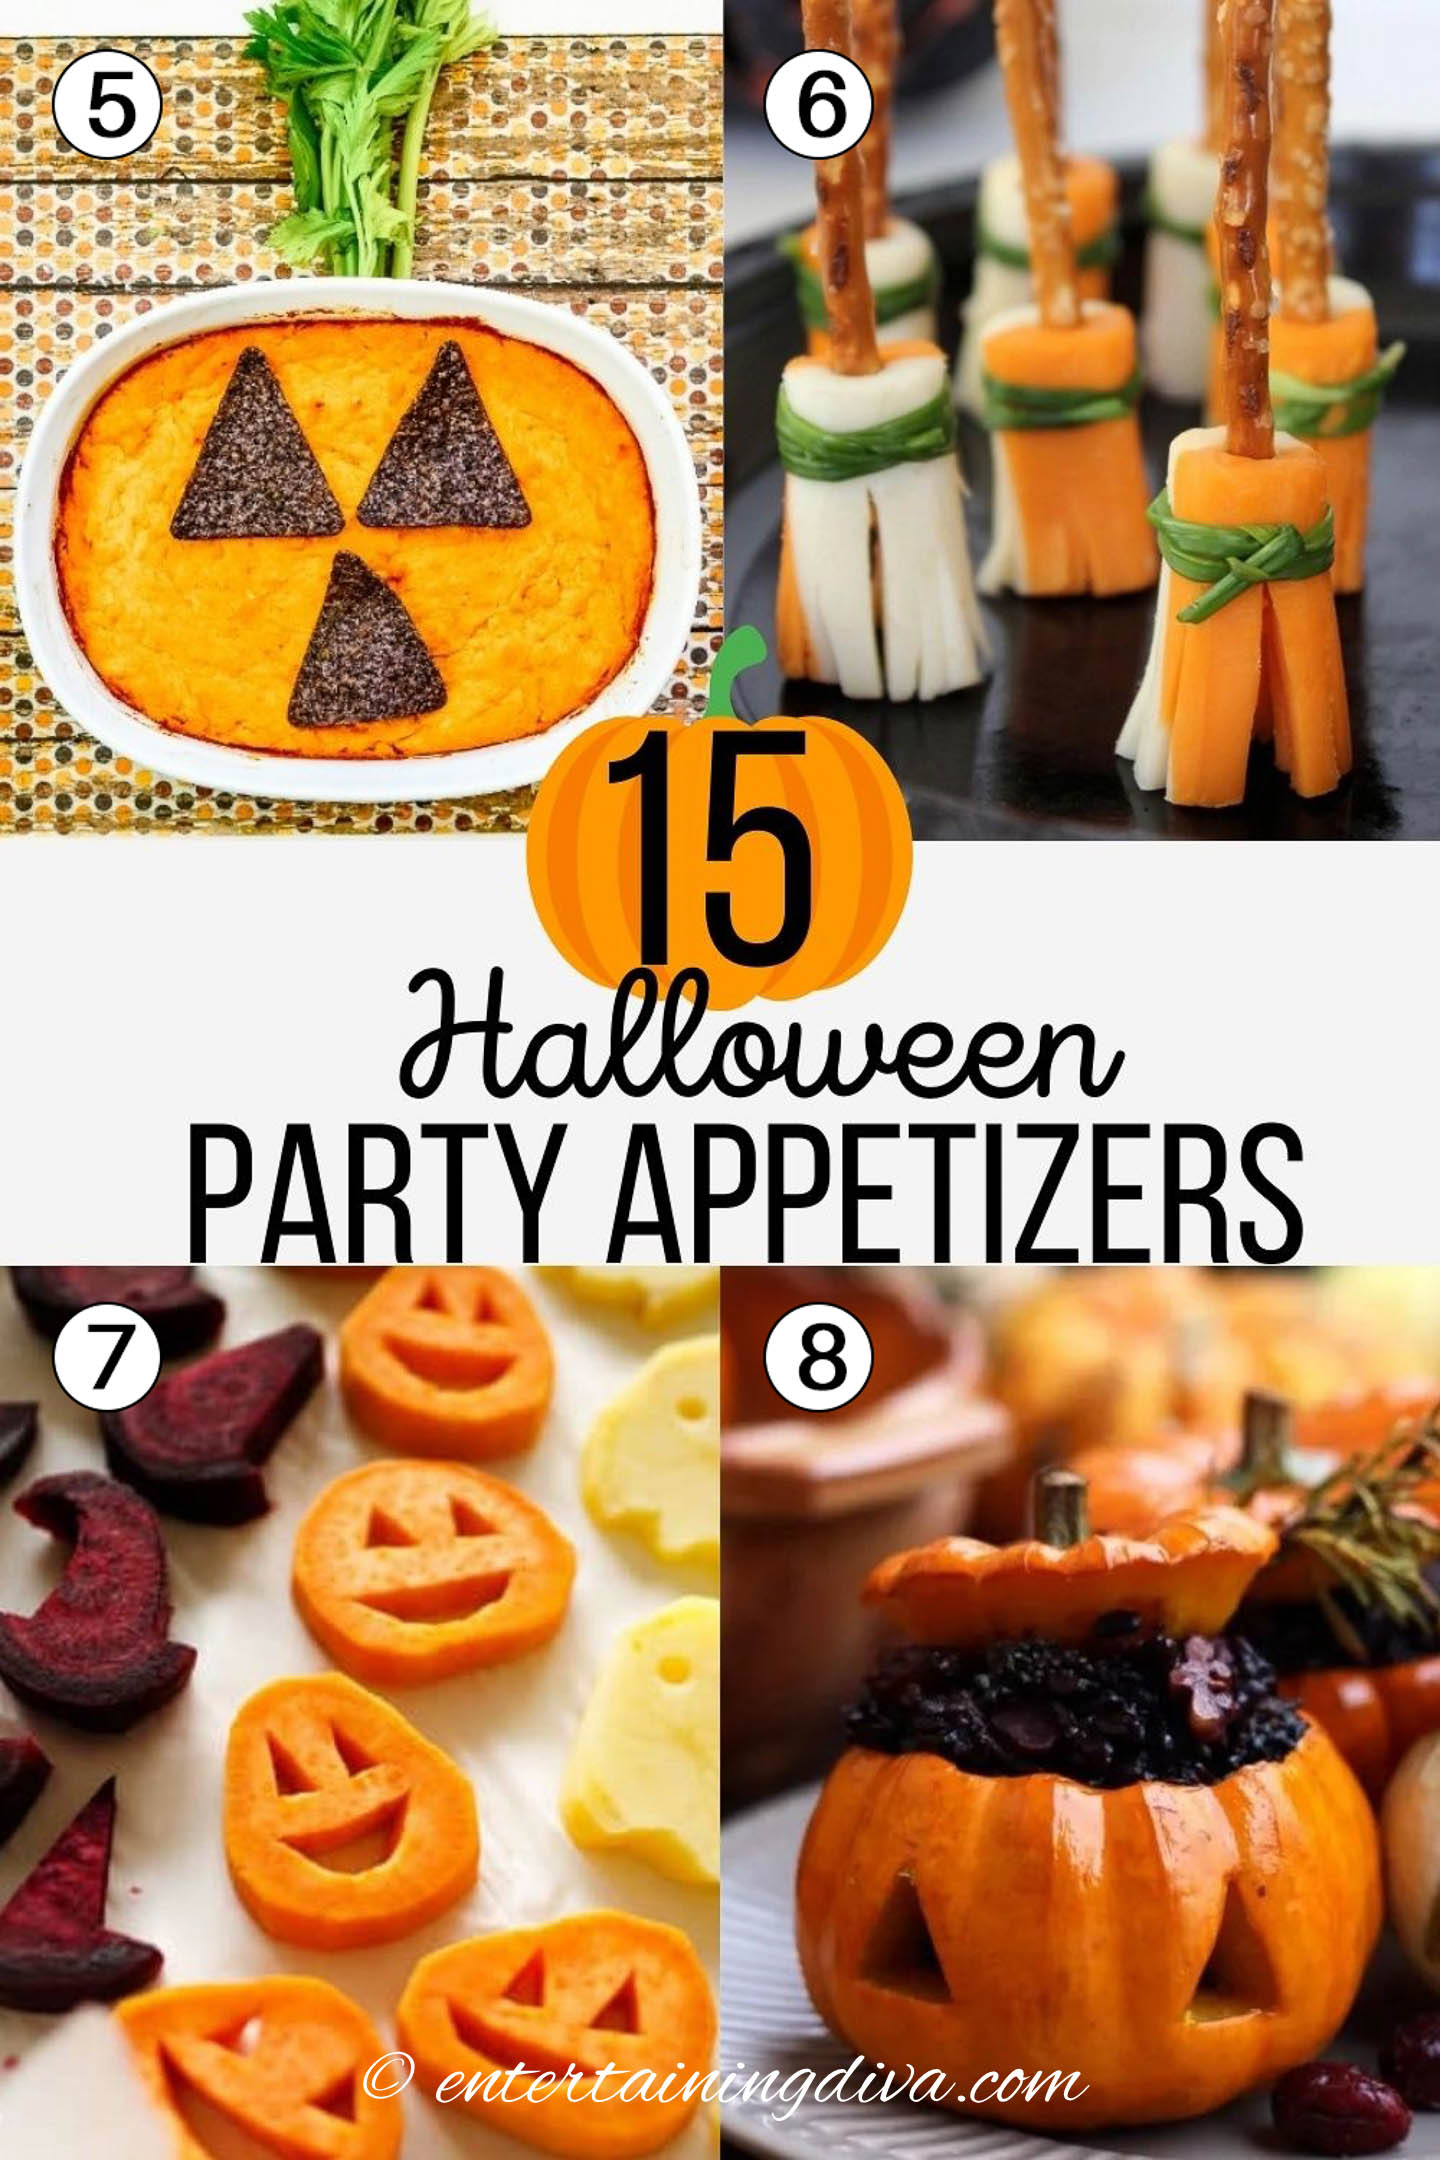 Halloween party appetizers - Halloween buffalo chicken dip, Witches broomstick appetizer, roasted Halloween vegetables, stuffed pumpkins